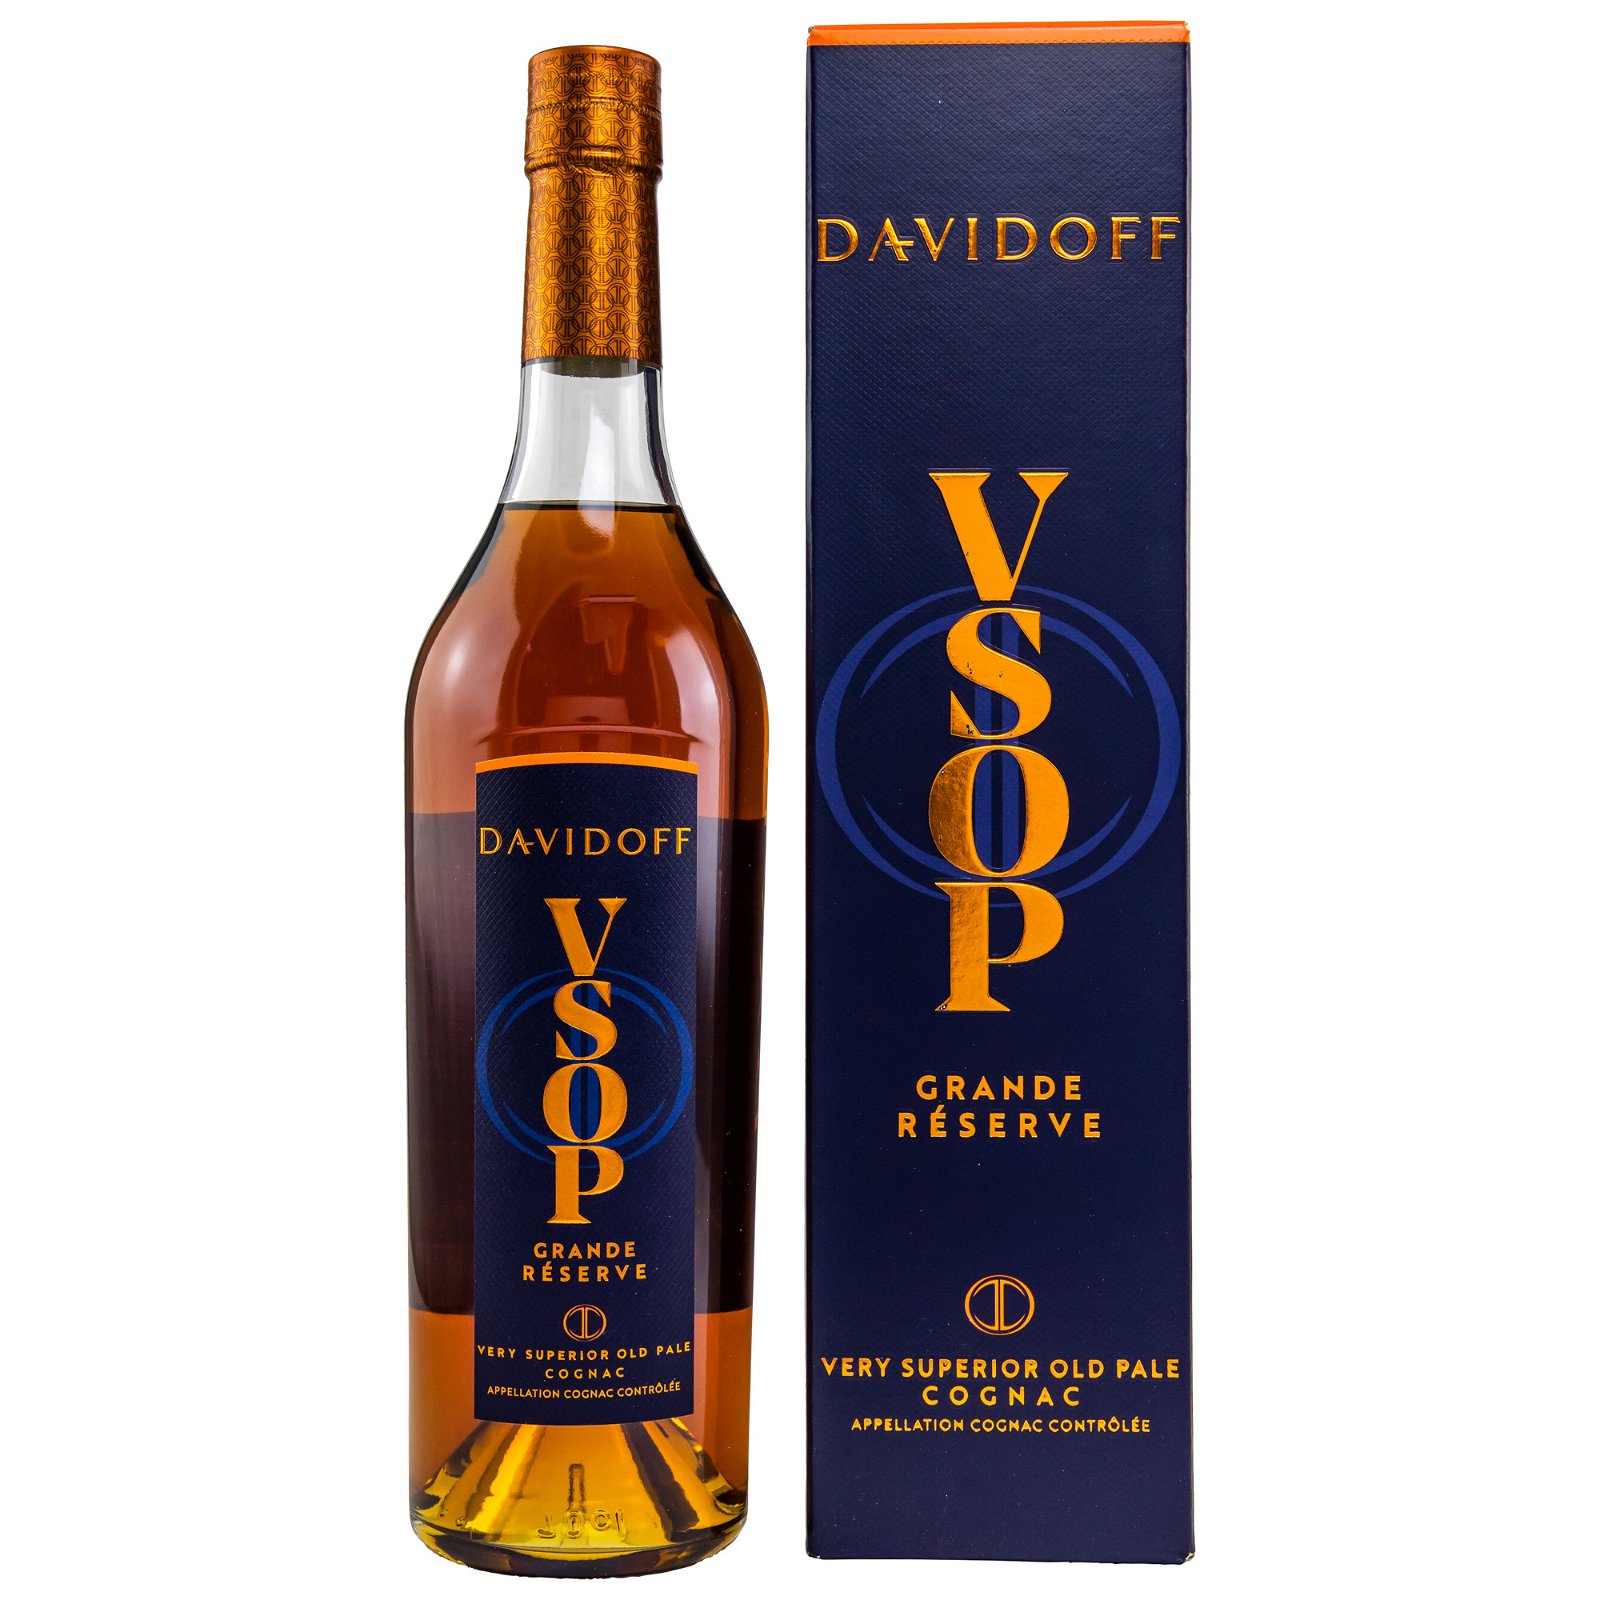 Davidoff VSOP Grande Réserve Cognac